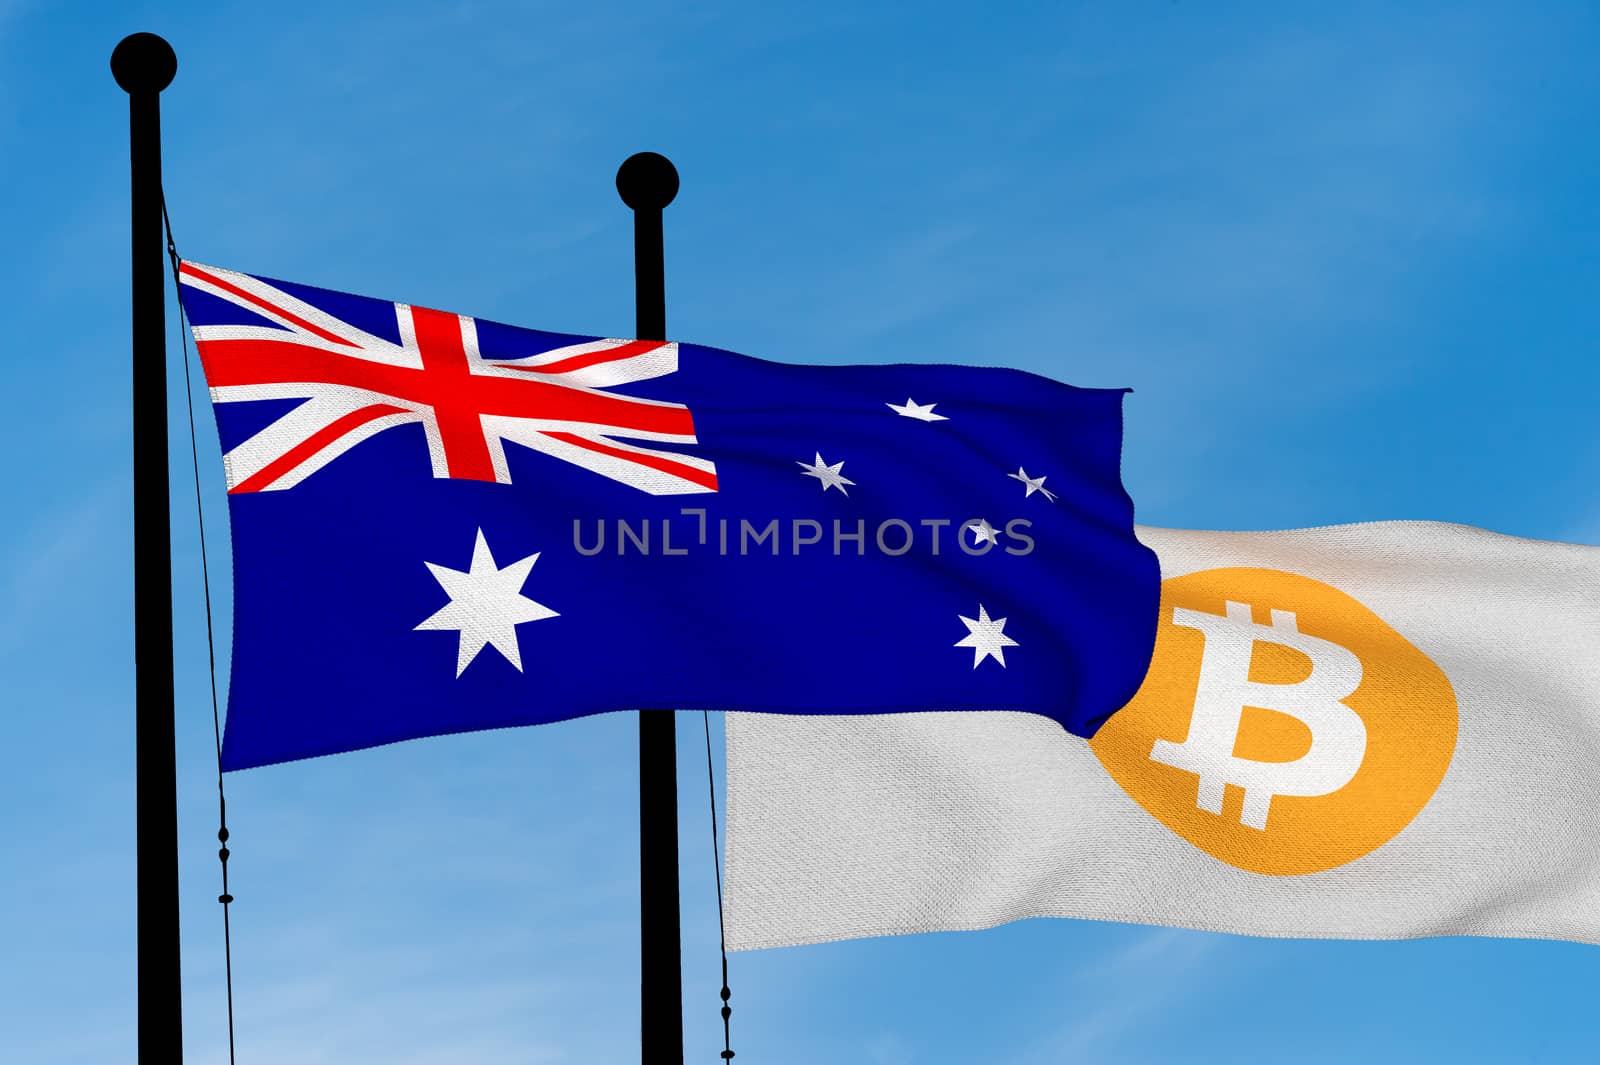 Australian flag and Bitcoin Flag waving over blue sky (3D rendering)